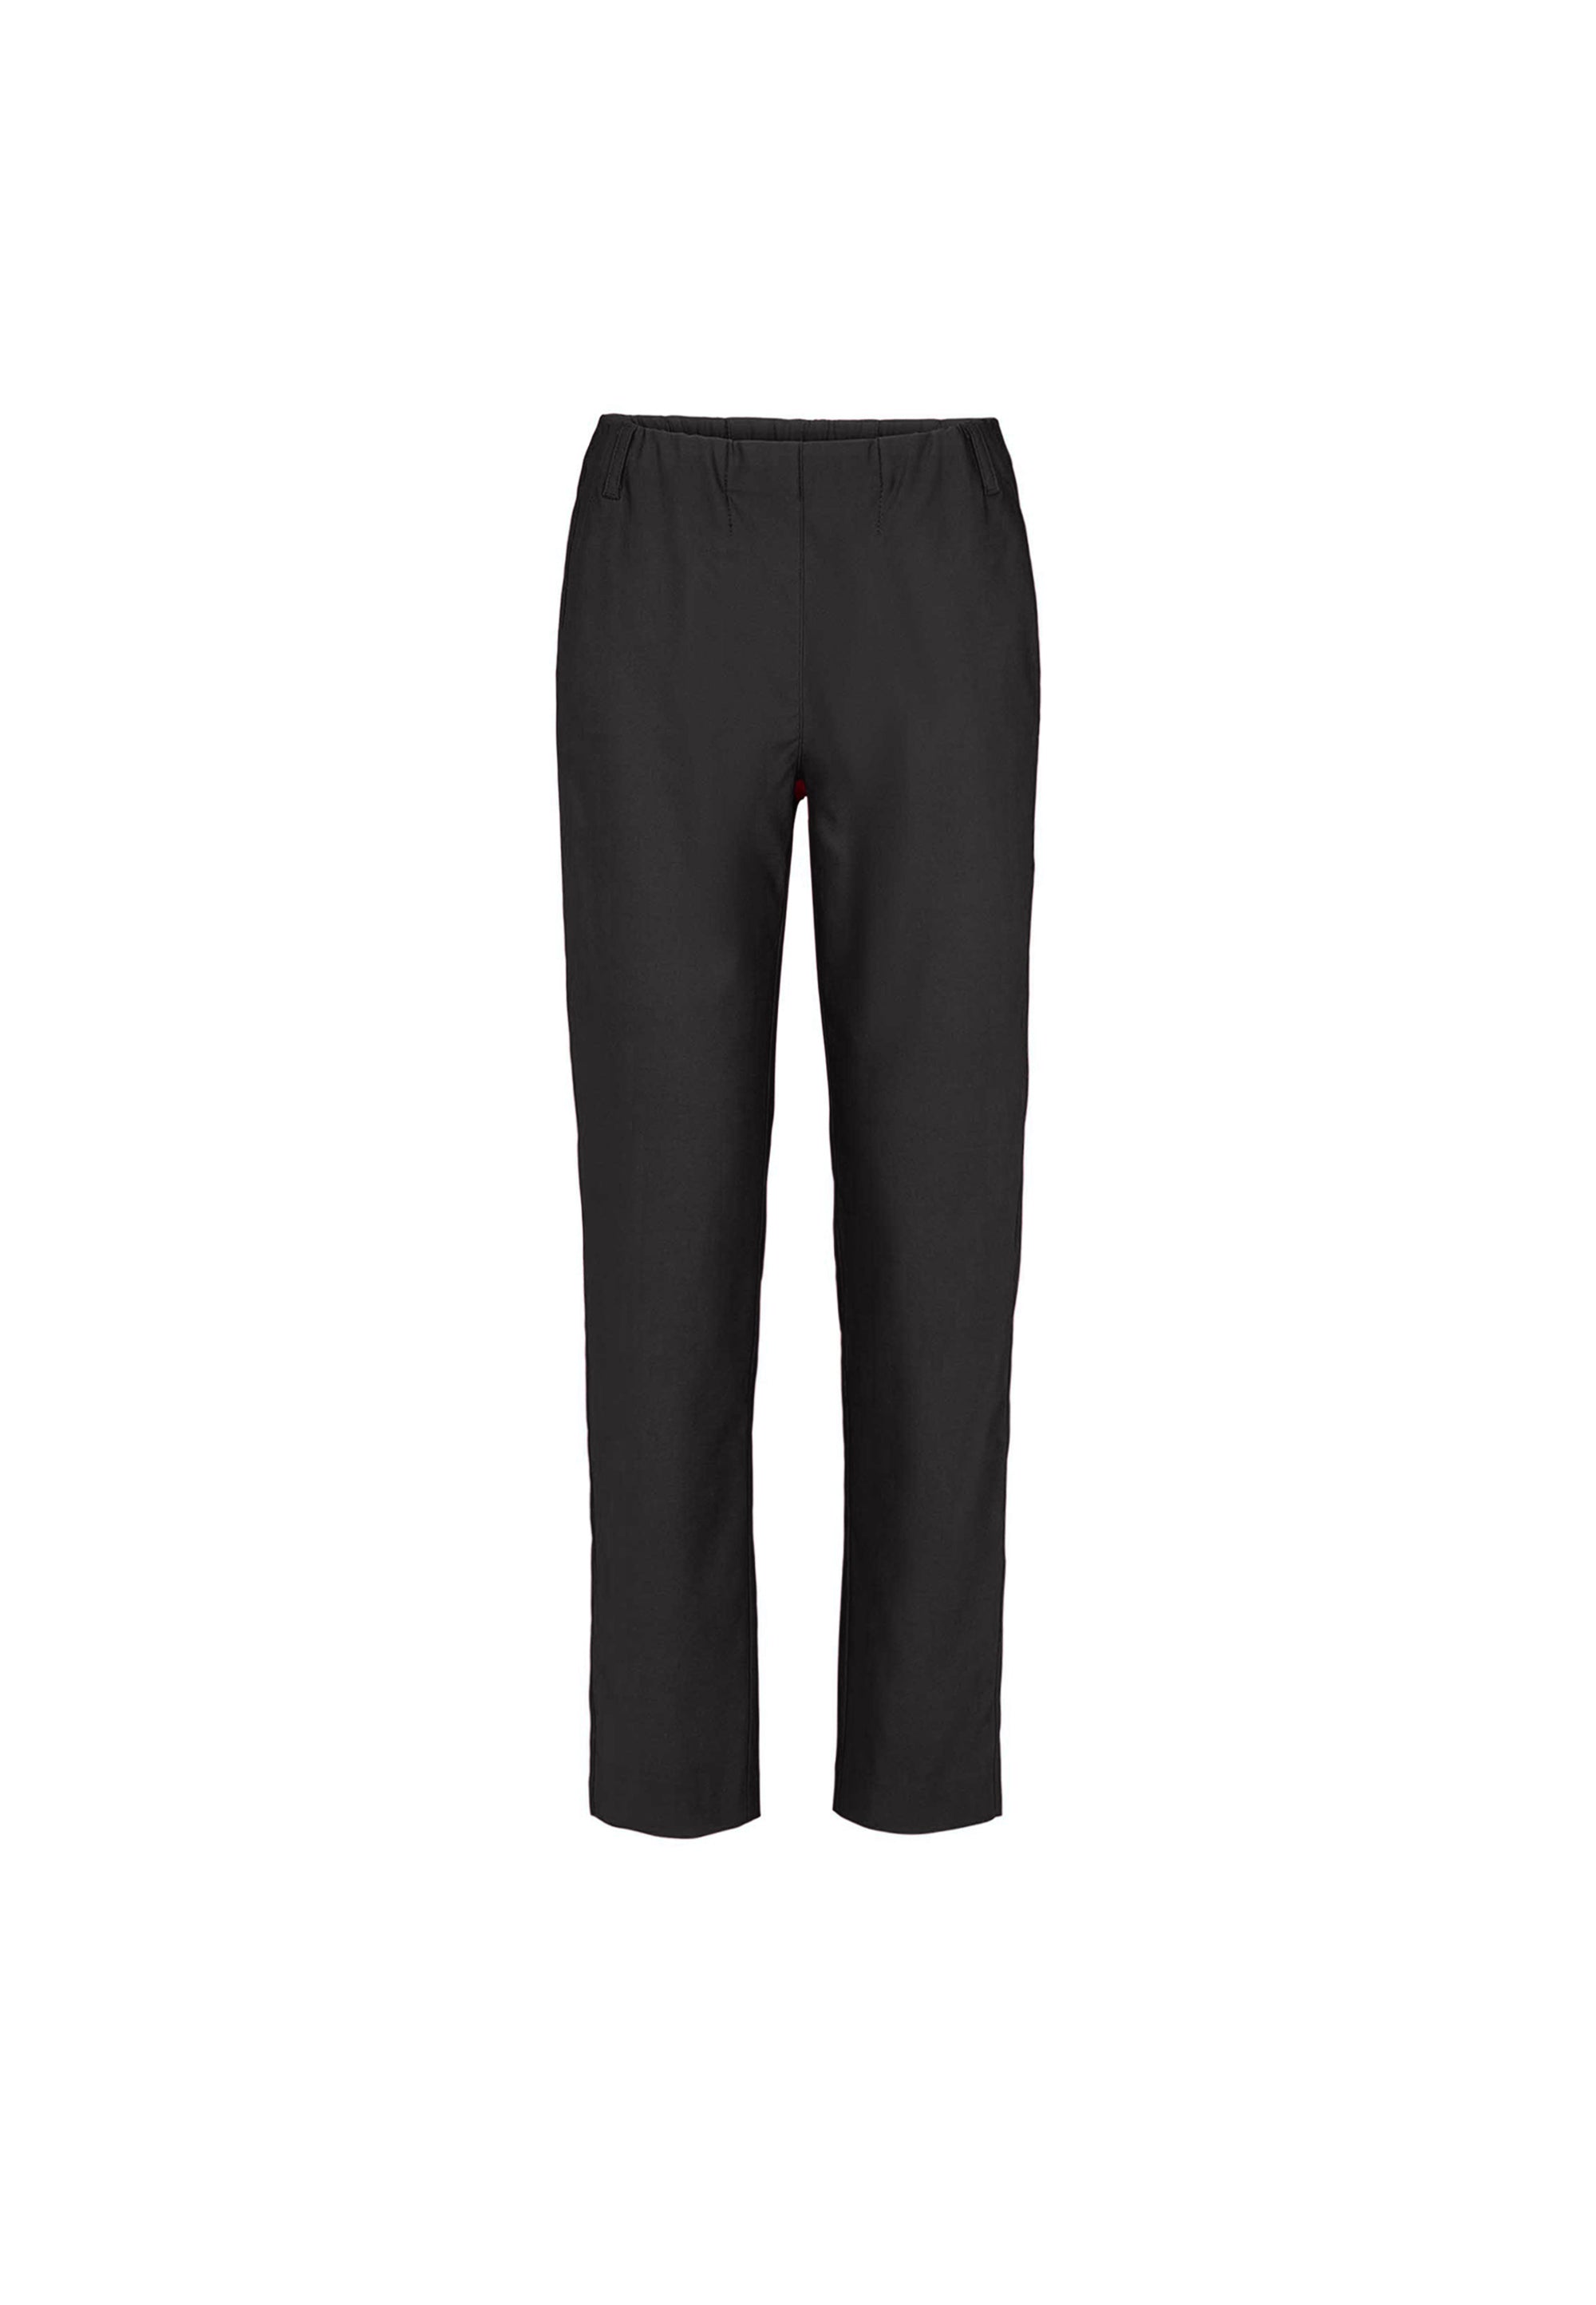 LAURIE Taylor Regular - Medium Length Trousers REGULAR 99000 Black